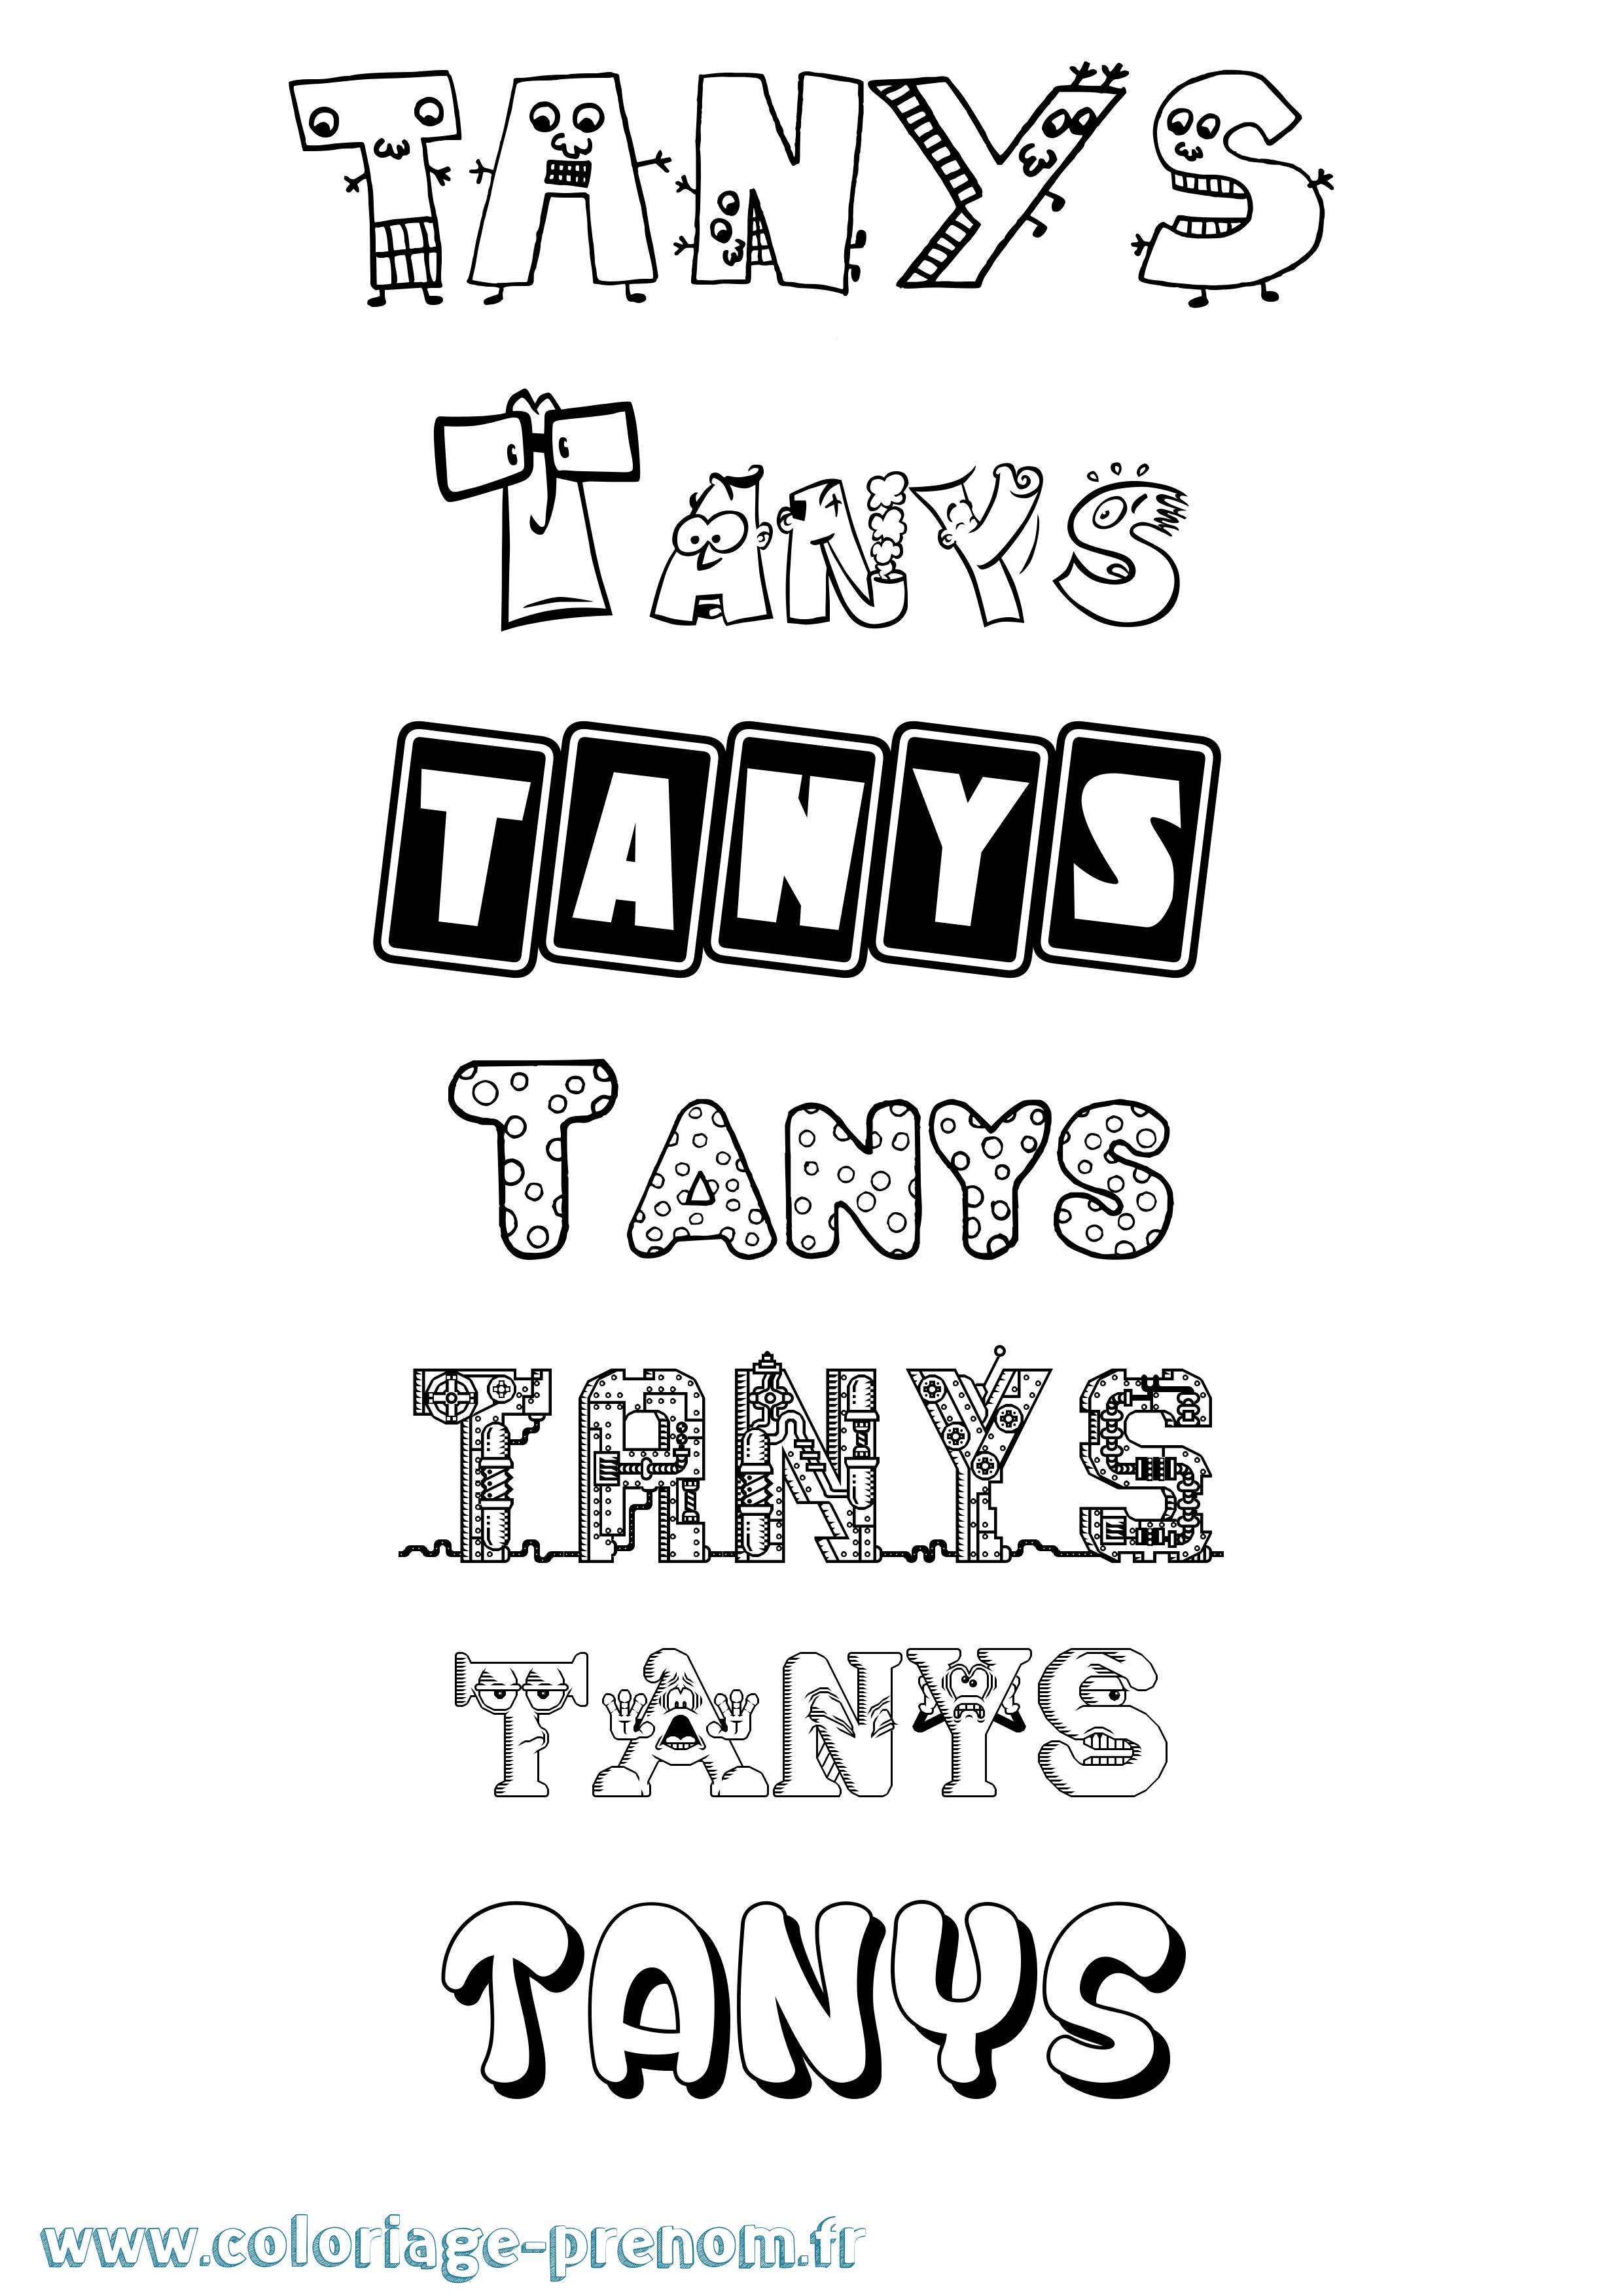 Coloriage prénom Tanys Fun